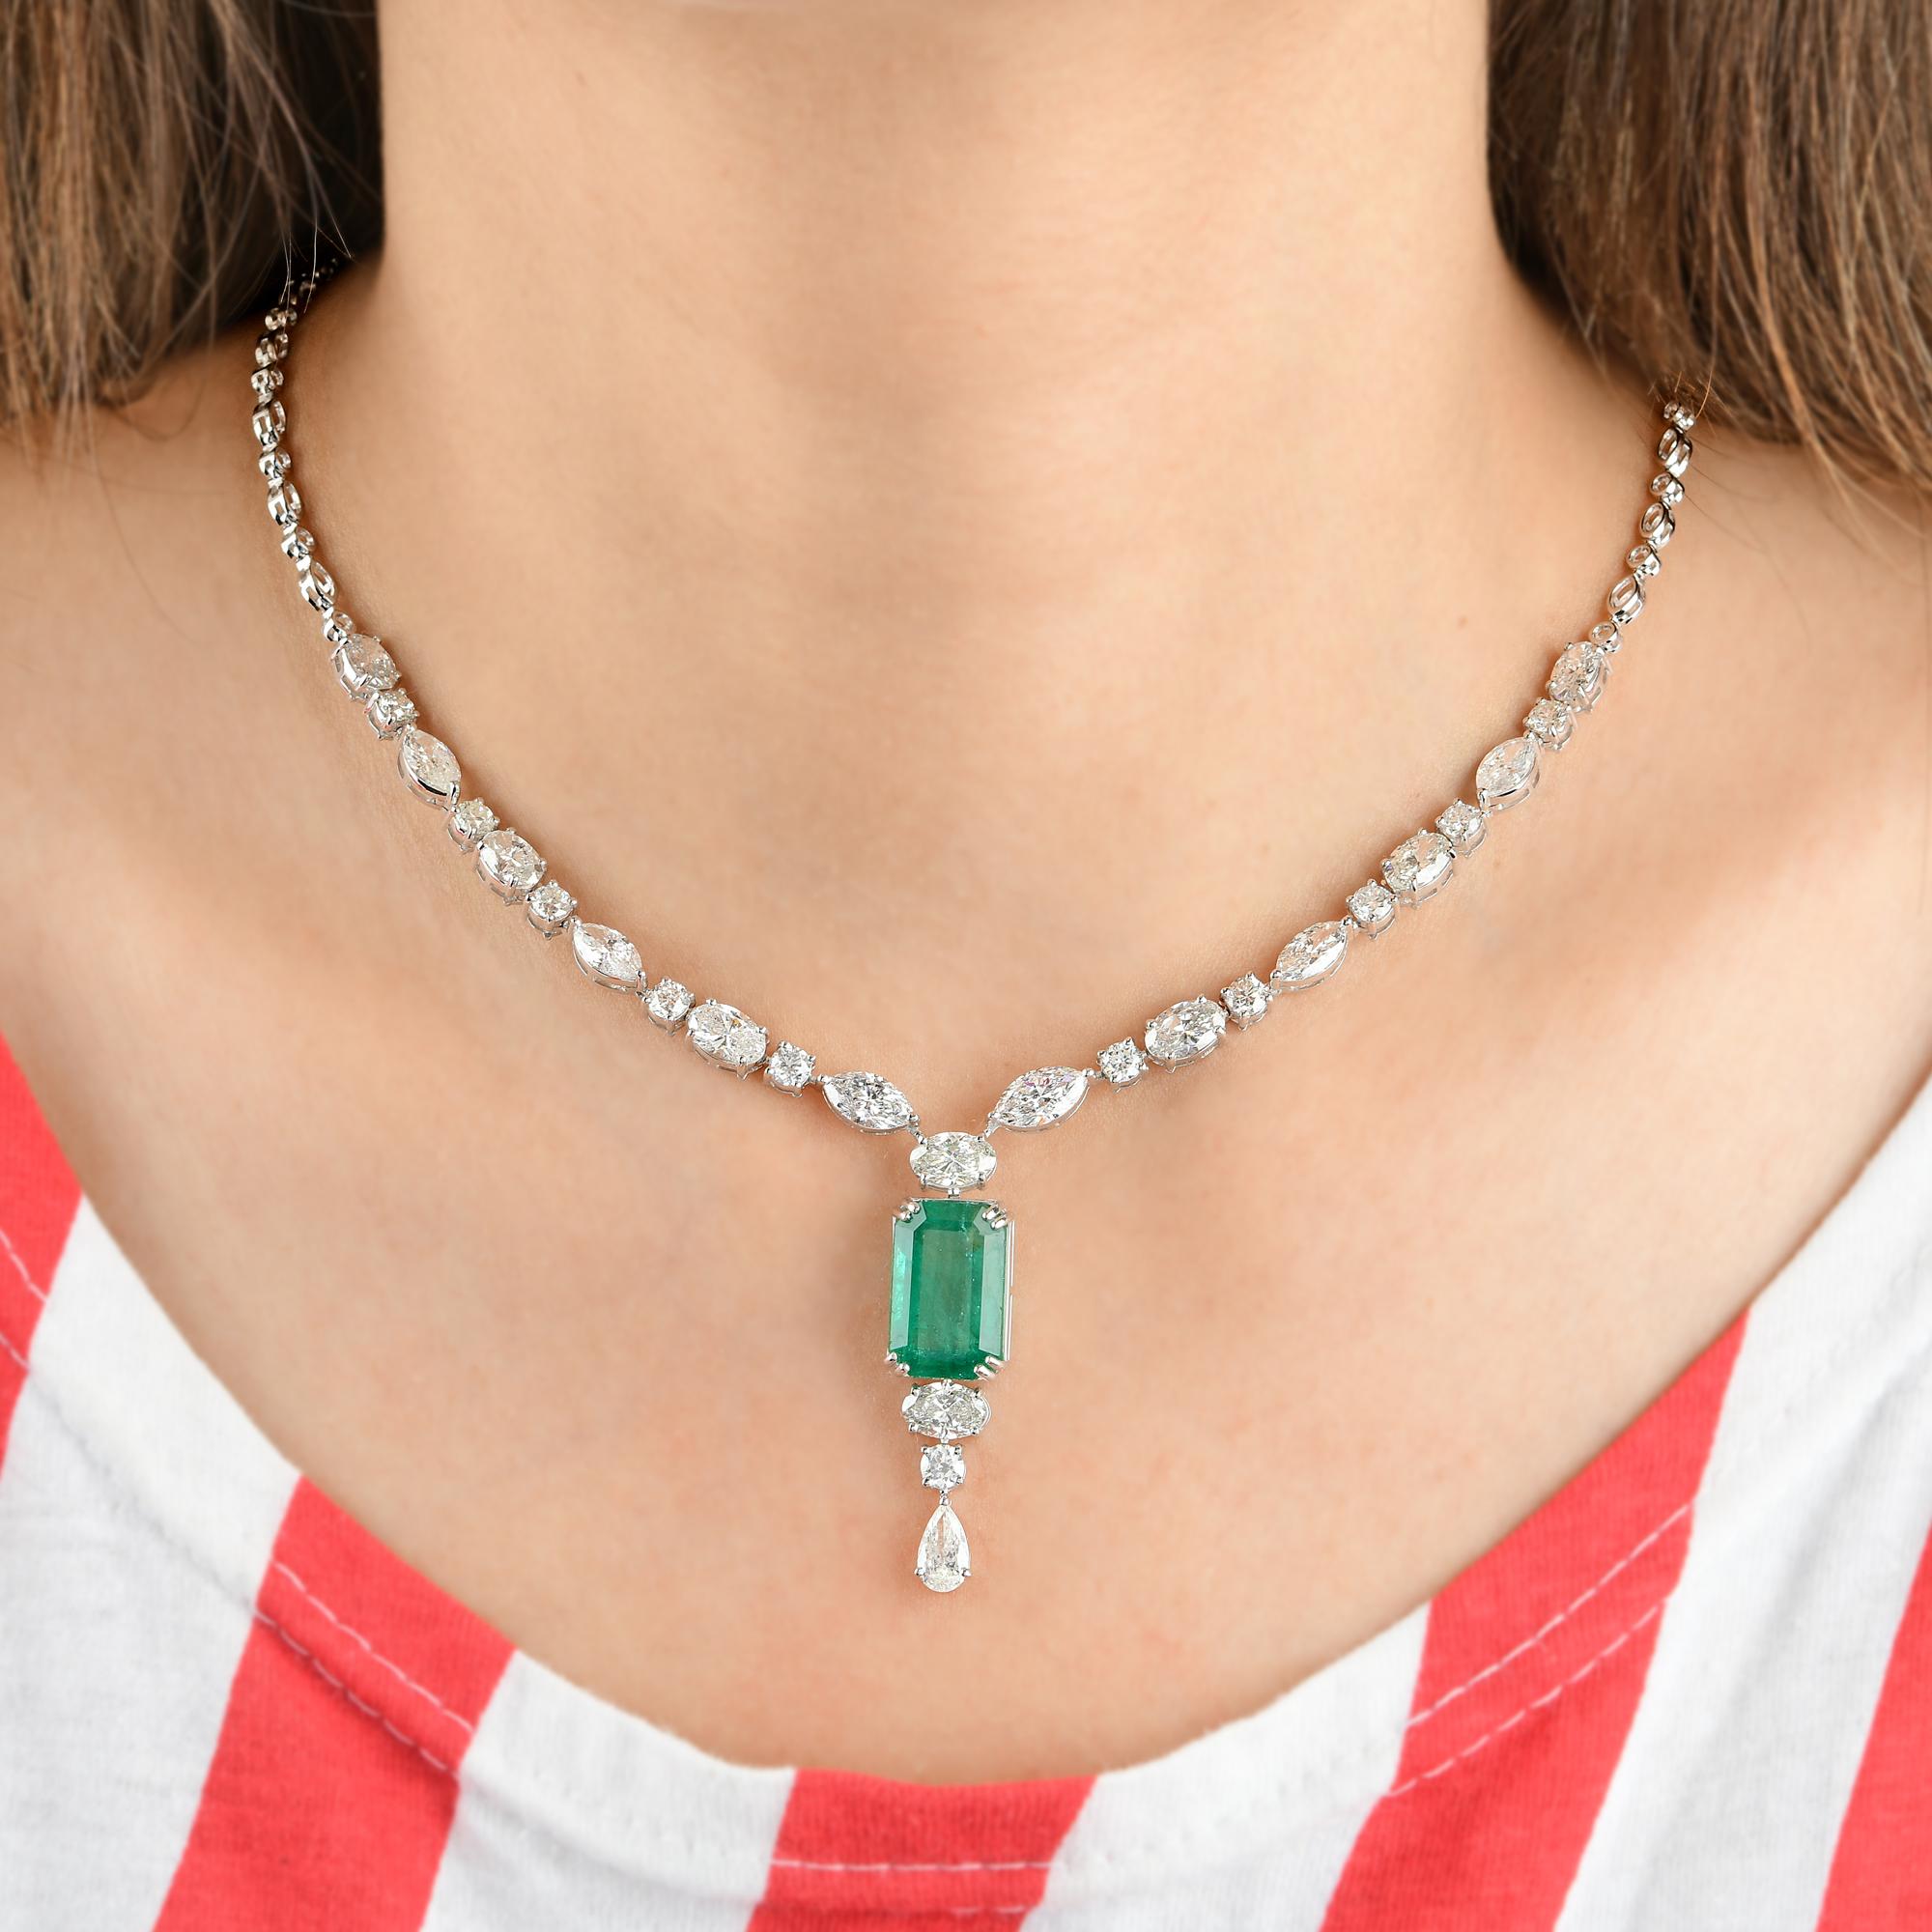 Oval Cut Natural Emerald Gemstone Necklace Diamond 18 Karat White Gold Handmade Jewelry For Sale